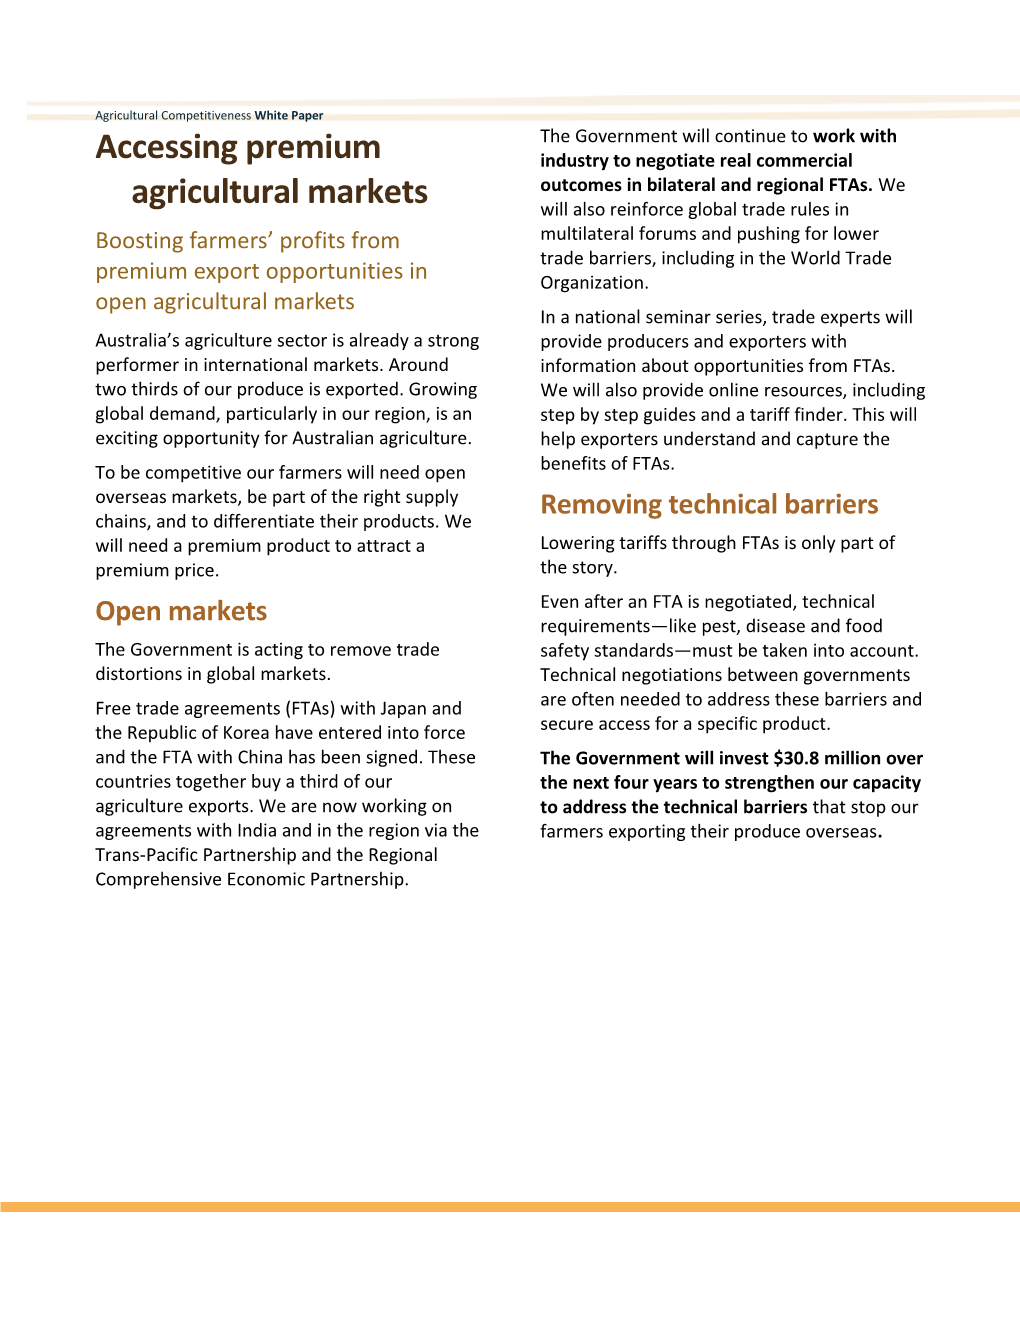 Accessing Premium Agricultural Markets